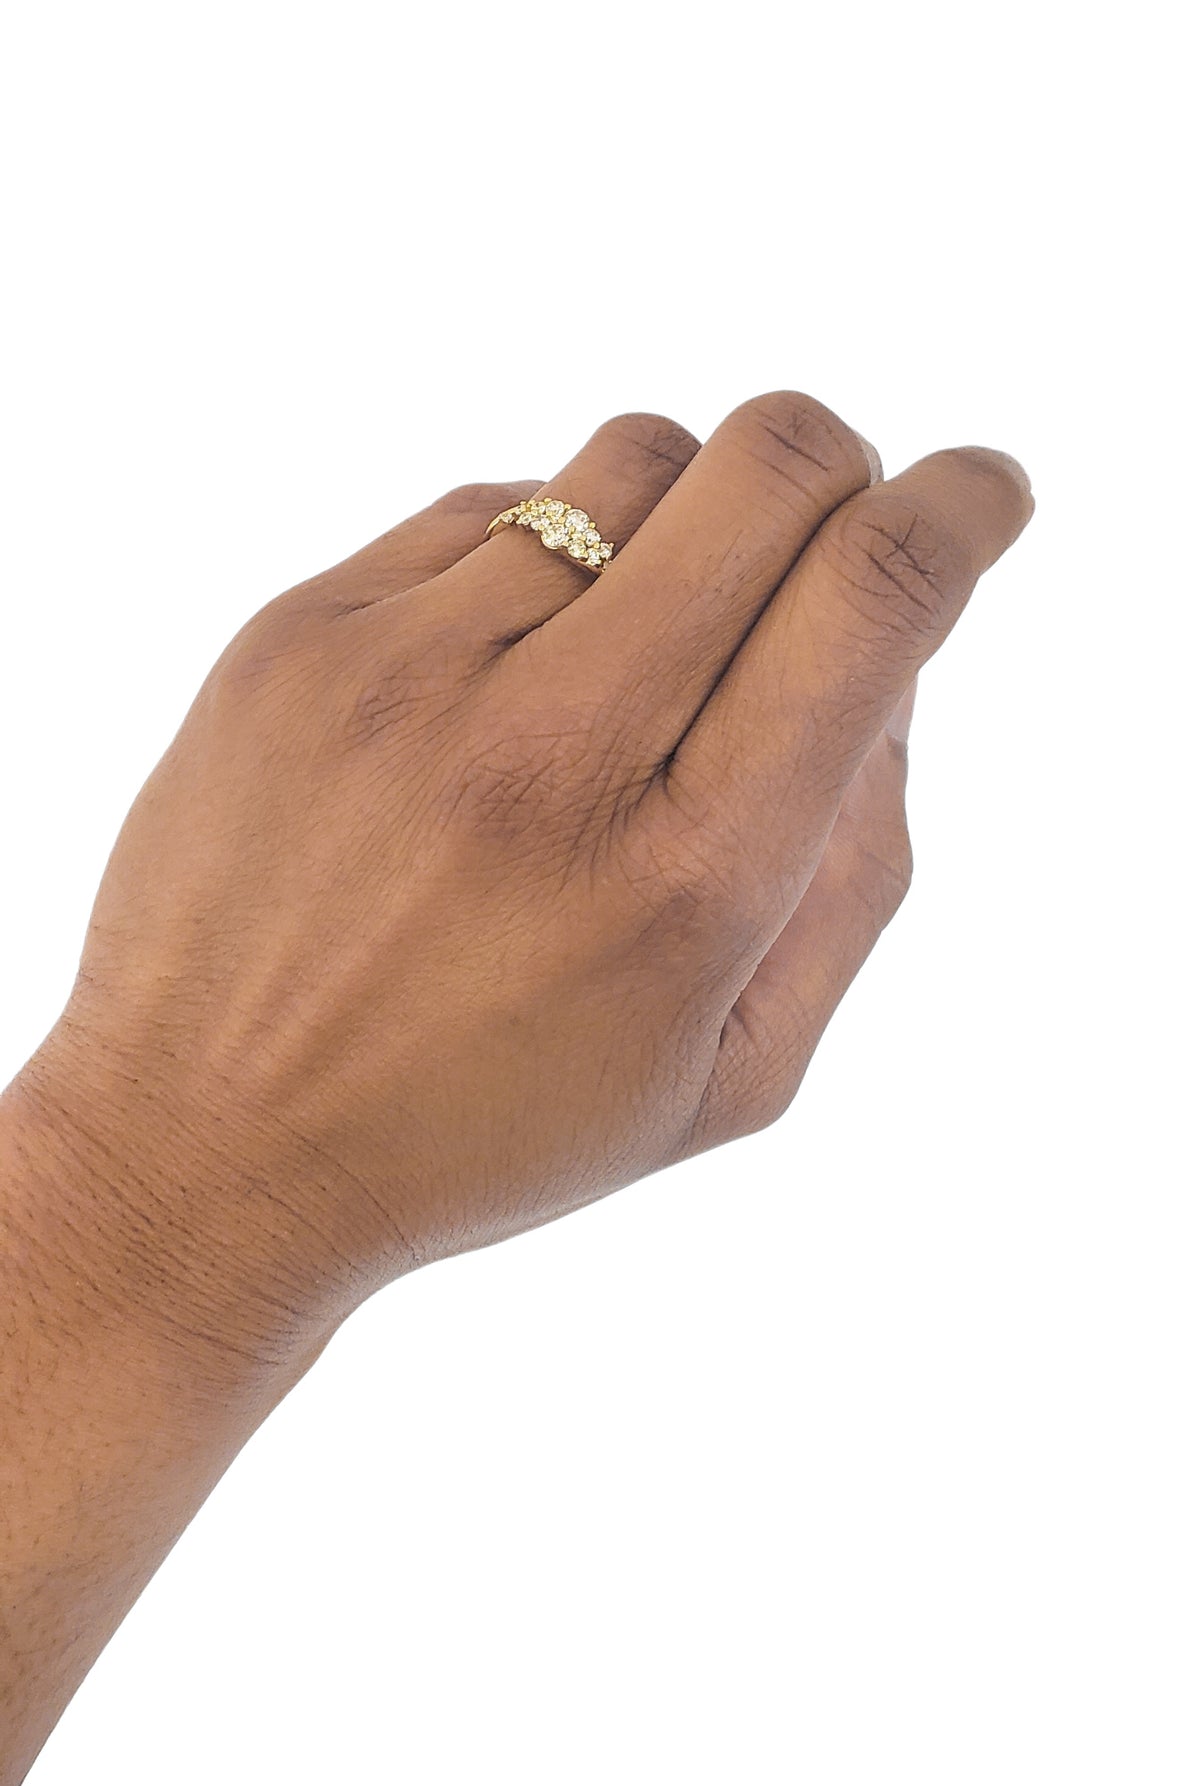 10K Yellow Gold Diamond 0.50cttw Ring, Size 6.5